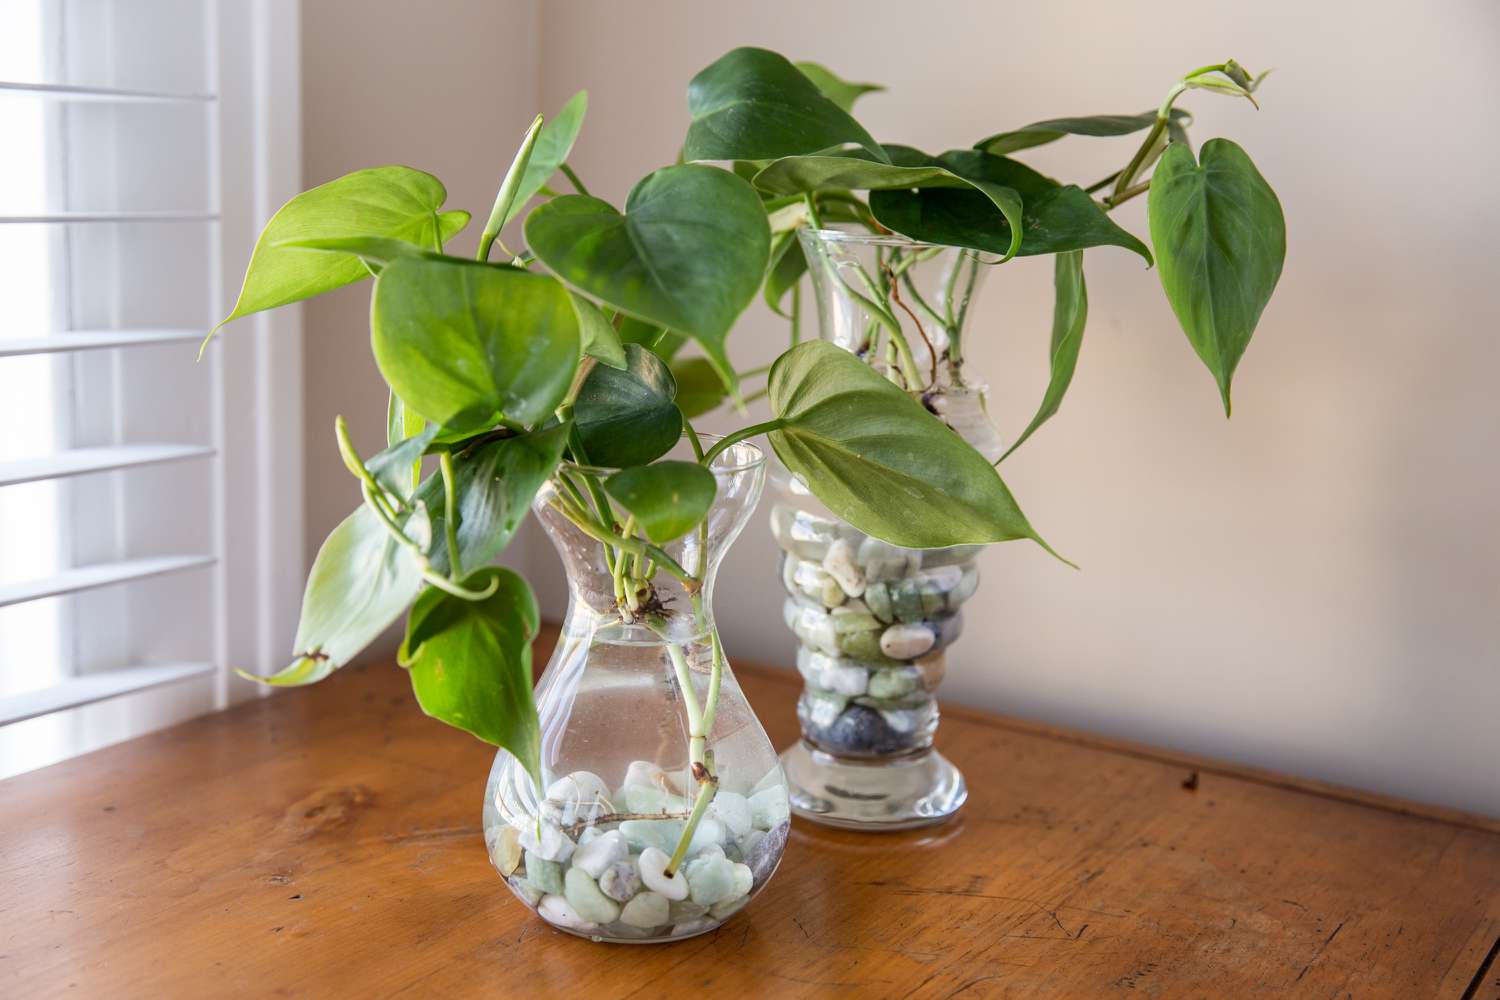 Pothos plants with roots in vases with water for indoor water garden